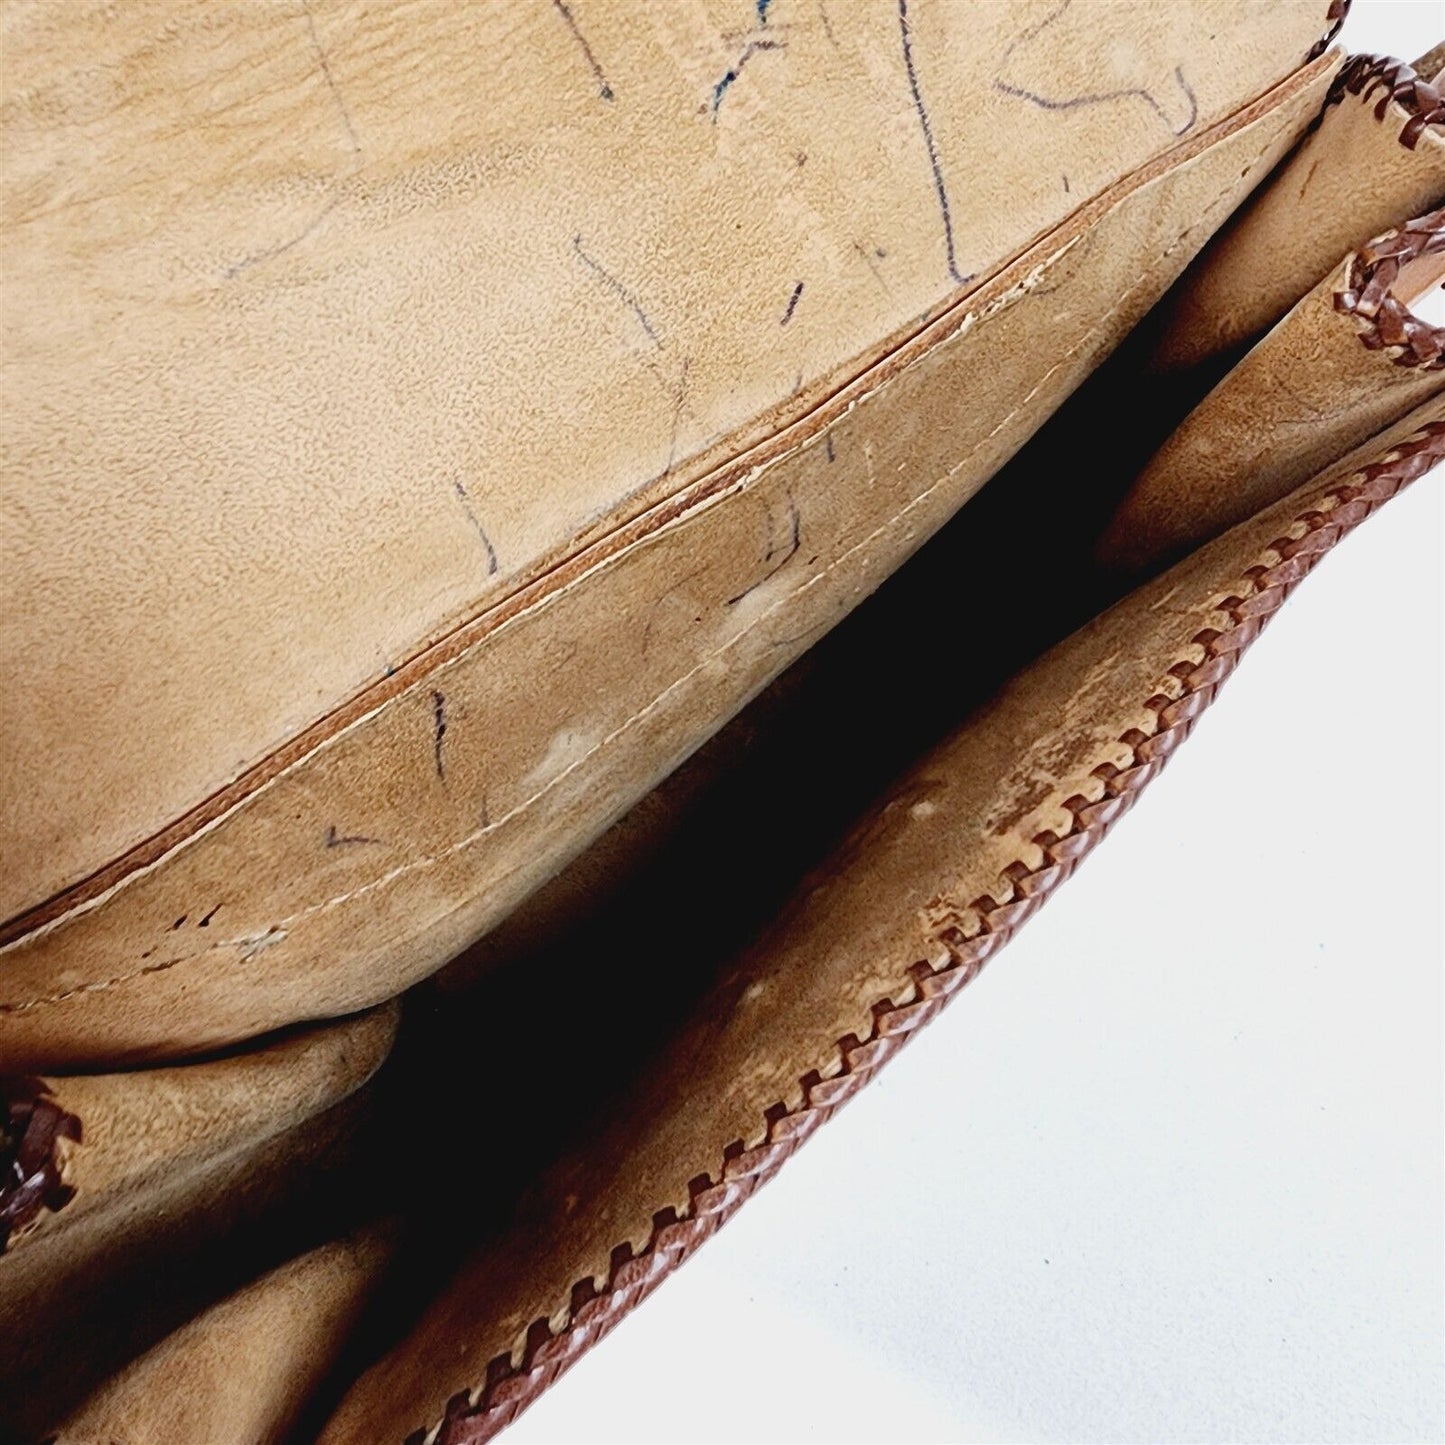 Vintage Hand Tooled Leather Purse Western Floral Laced Shoulder Bag GMB Initials